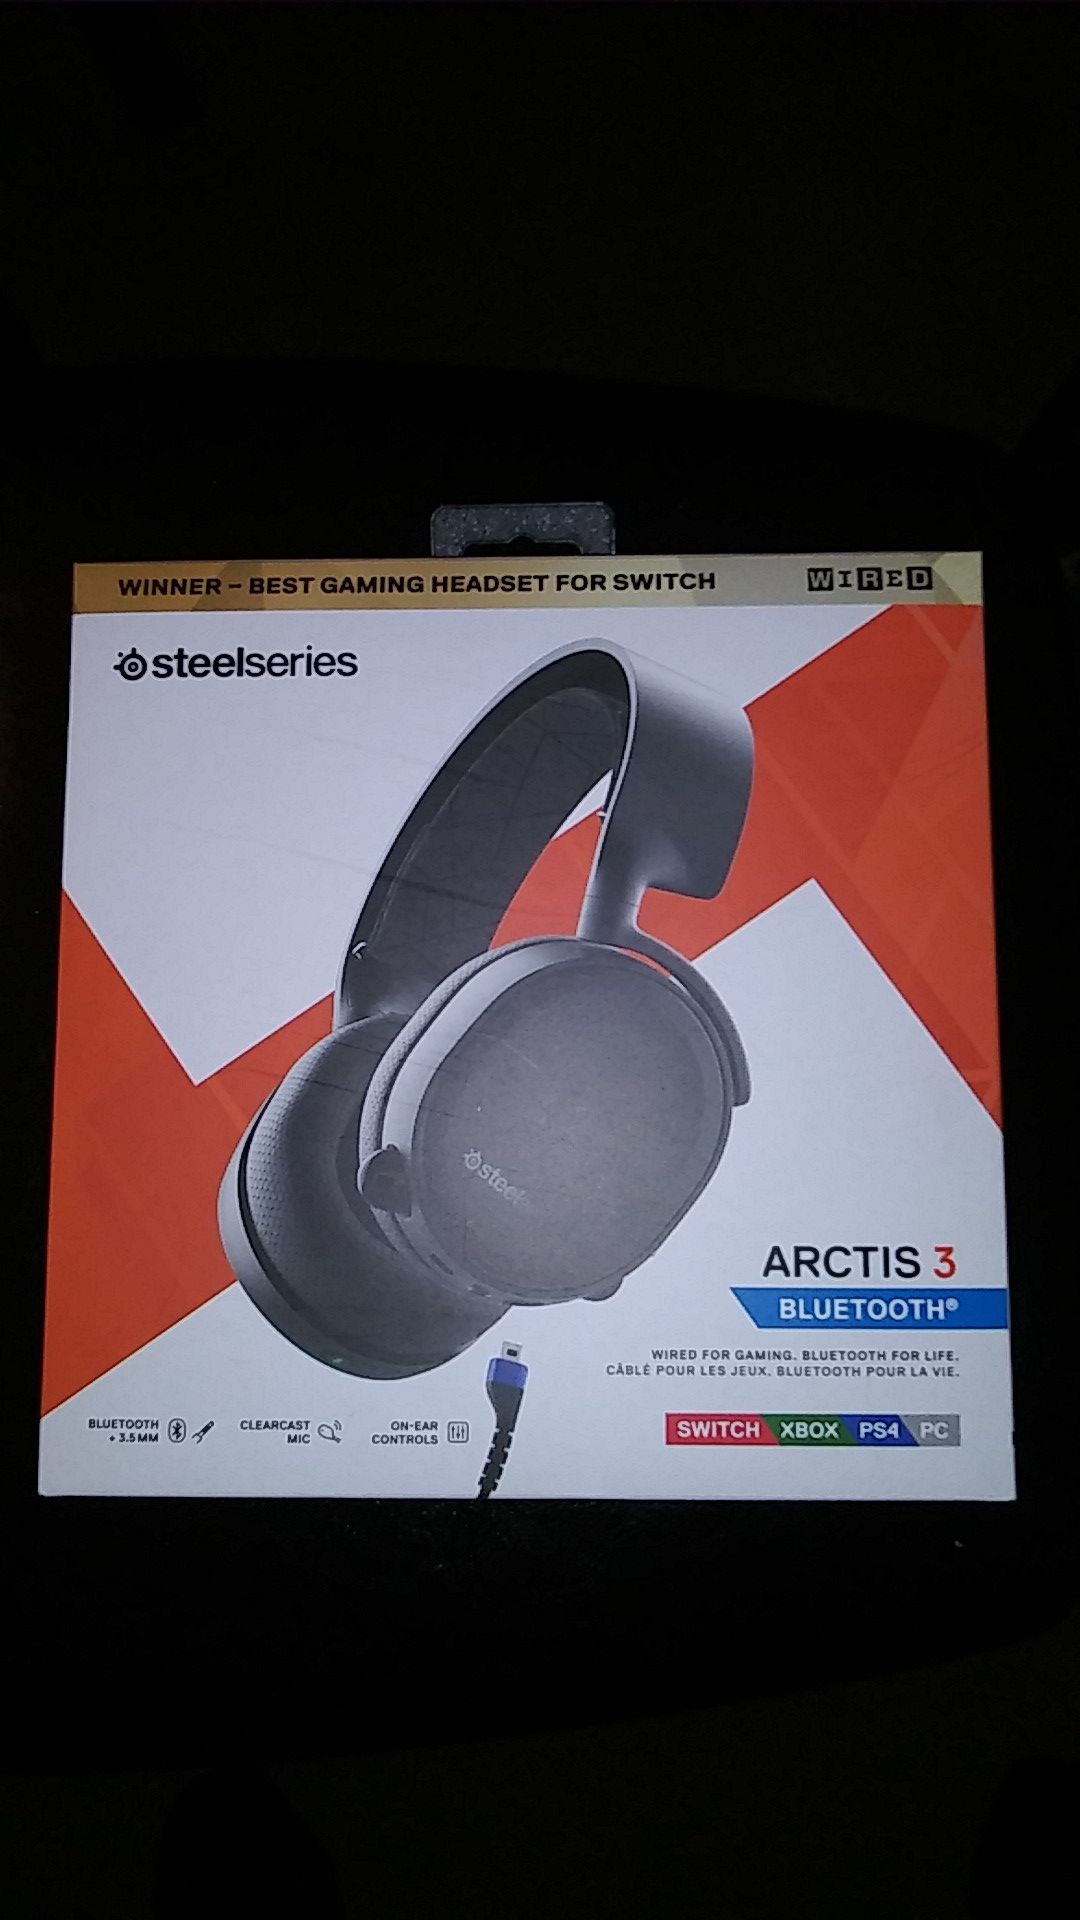 Steelseries Arctic 3 Bluetooth